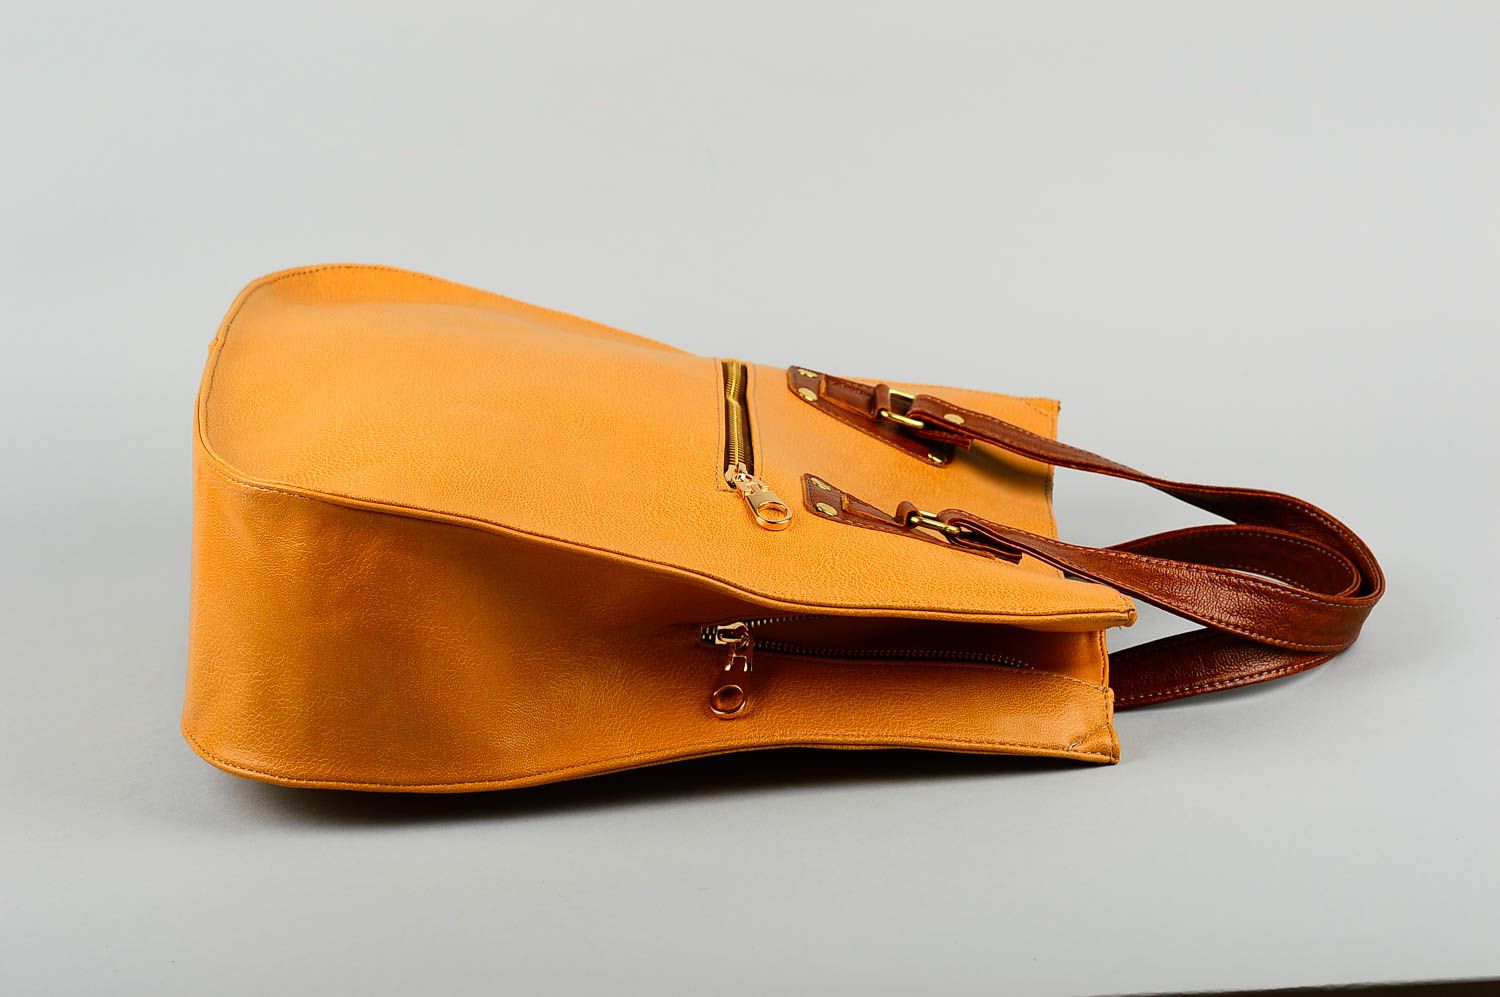 Stylish handmade bag design leather handbag luxury bags for girls gifts for her photo 3